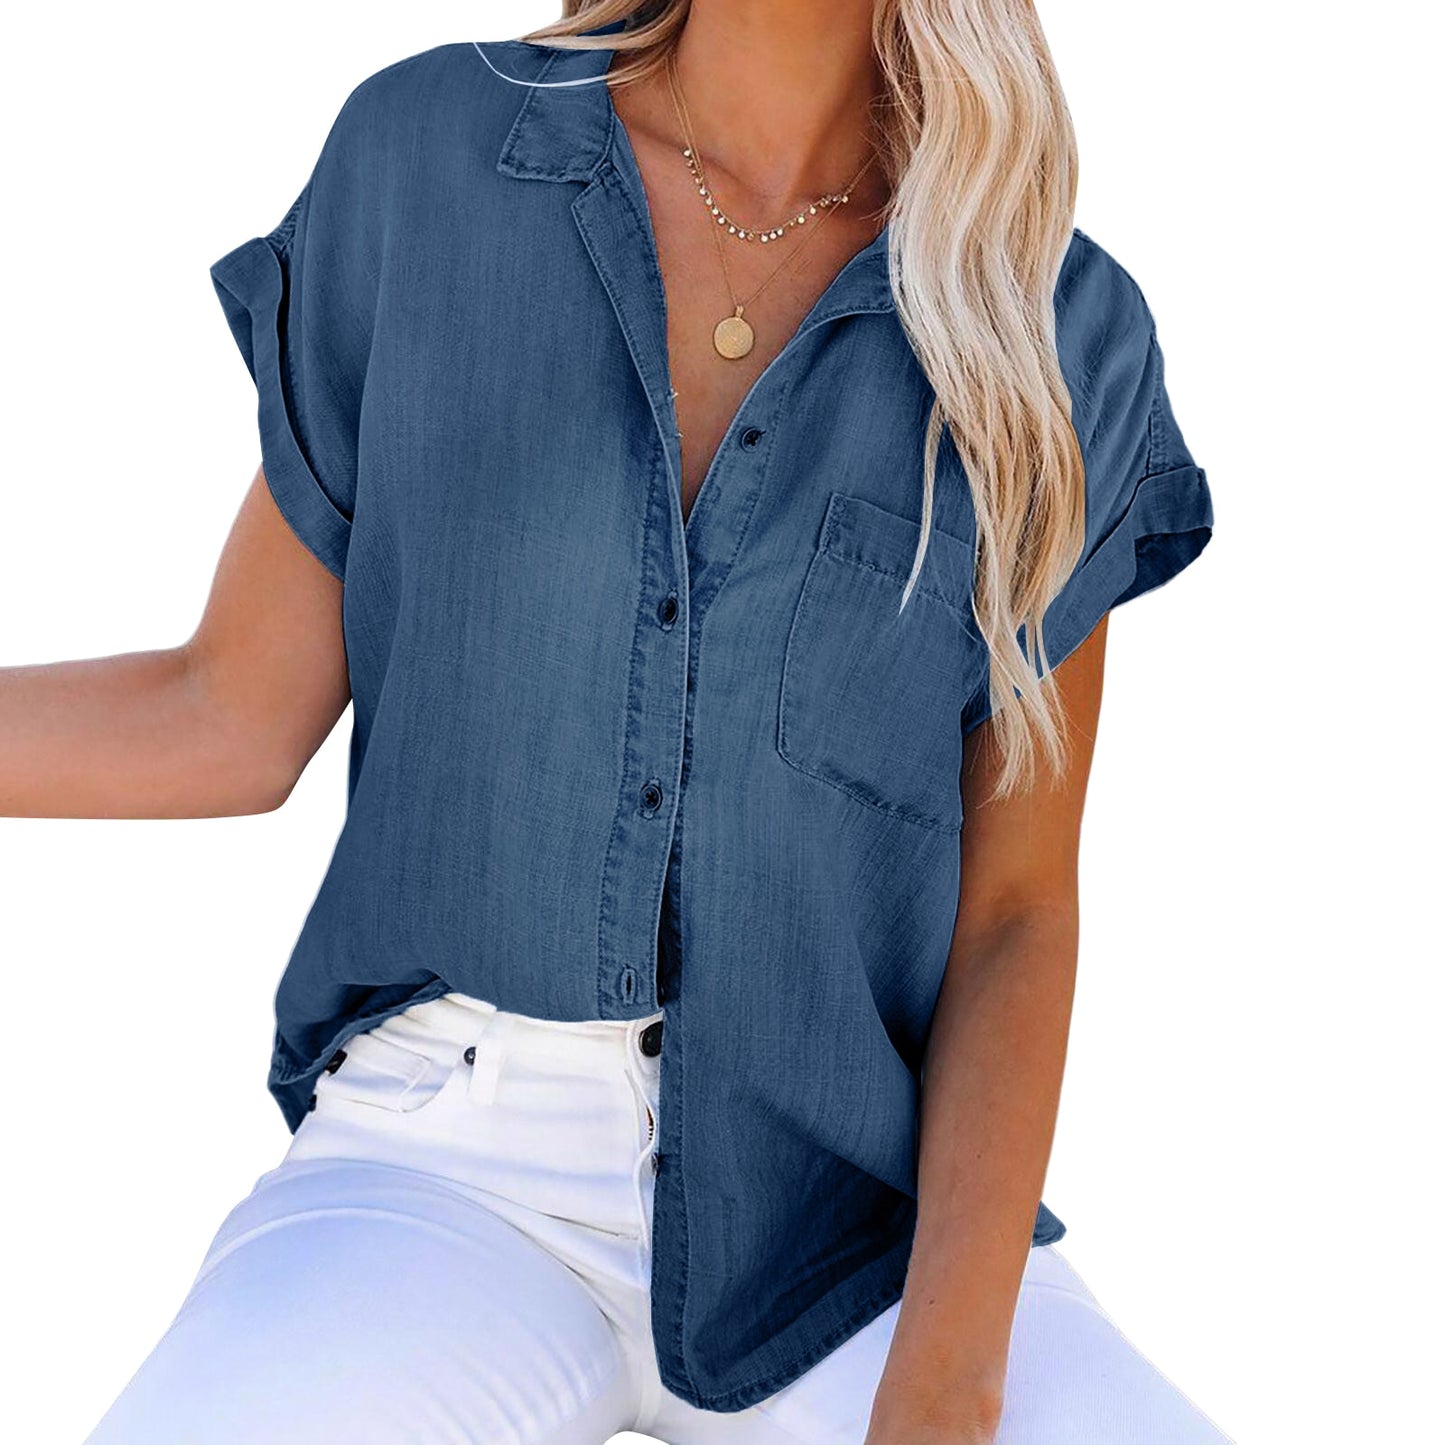 Camiseta feminina jeans casual sólida verão vintage